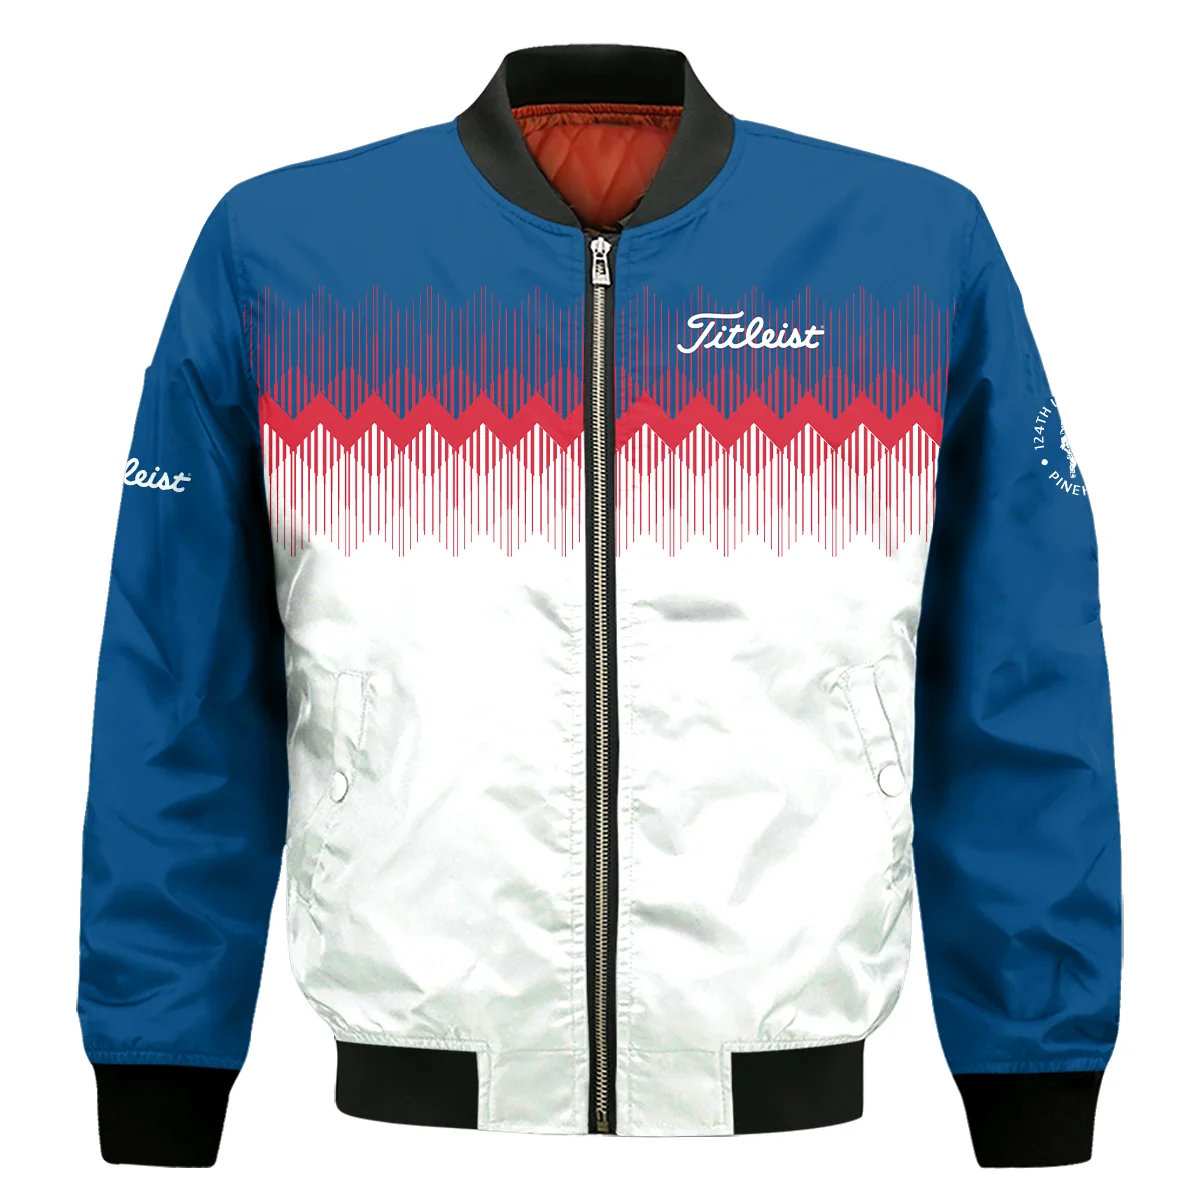 Titleist 124th U.S. Open Pinehurst Sleeveless Jacket Blue Red Fabric Pattern Golf Sleeveless Jacket